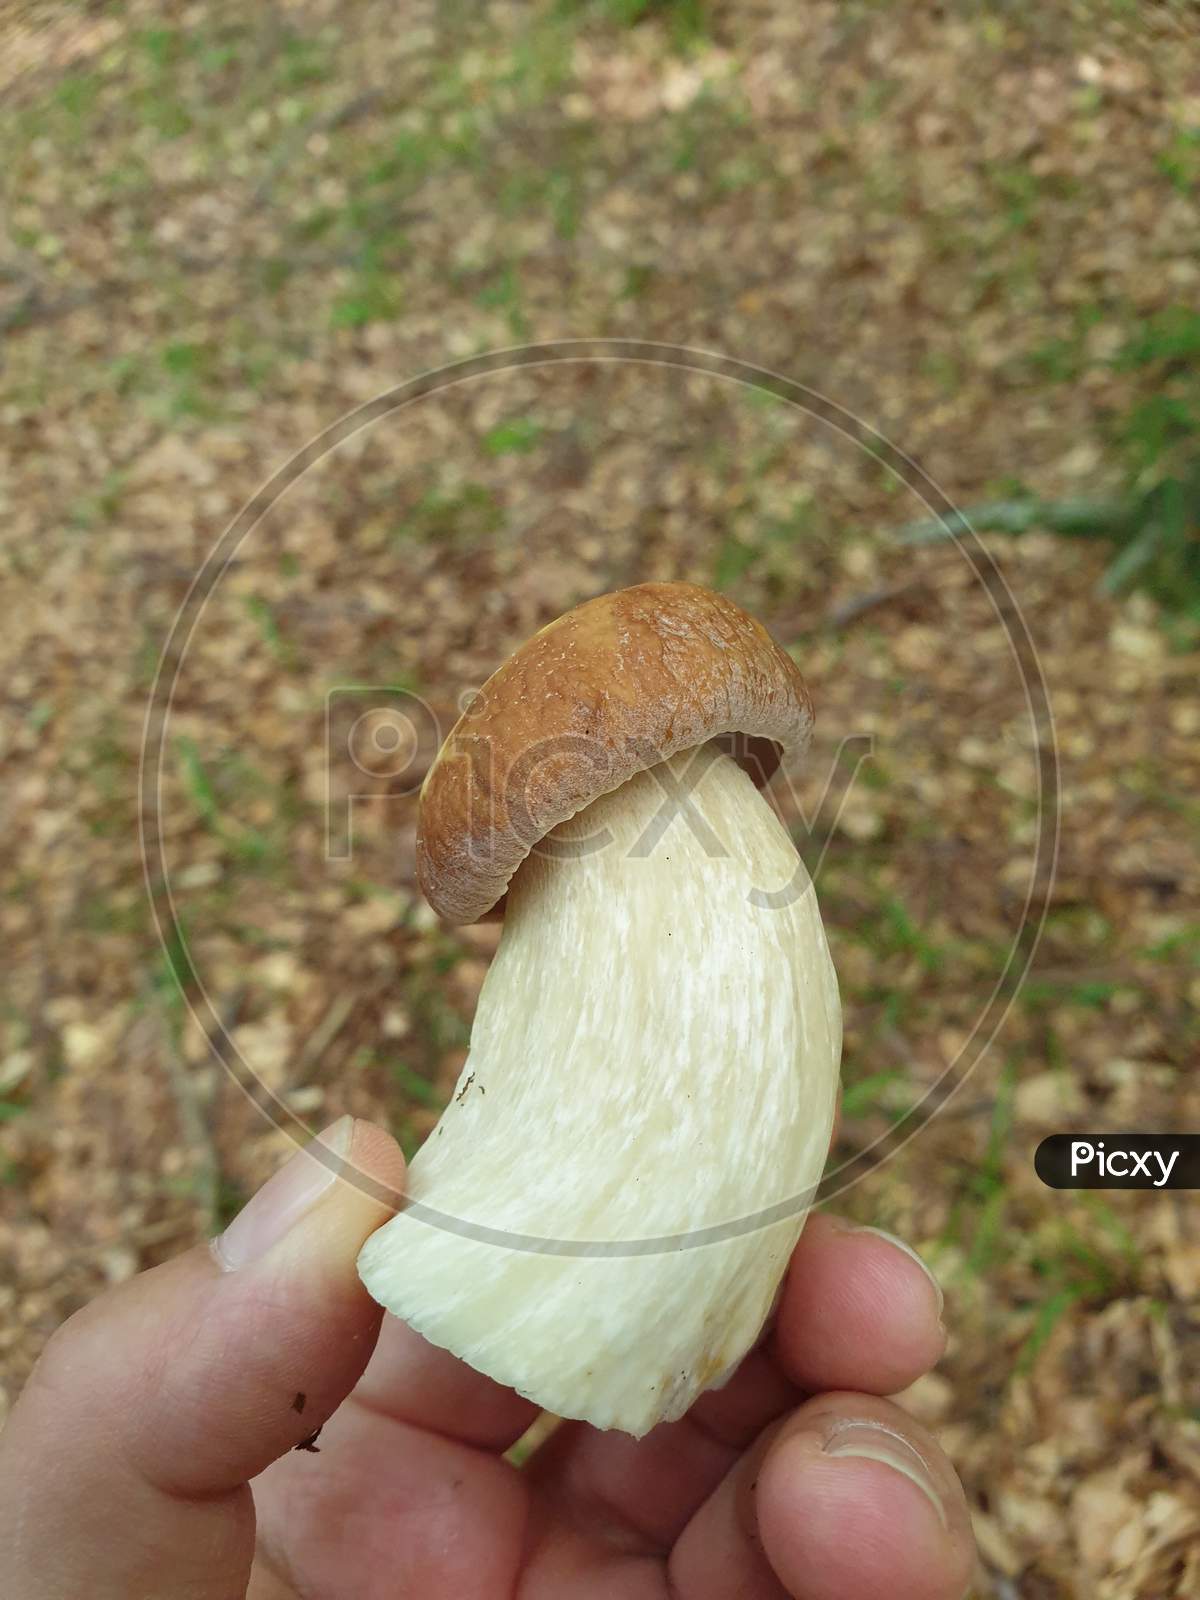 Young Tasty Edible Boletus Mushroom Freshly Cut In Hand